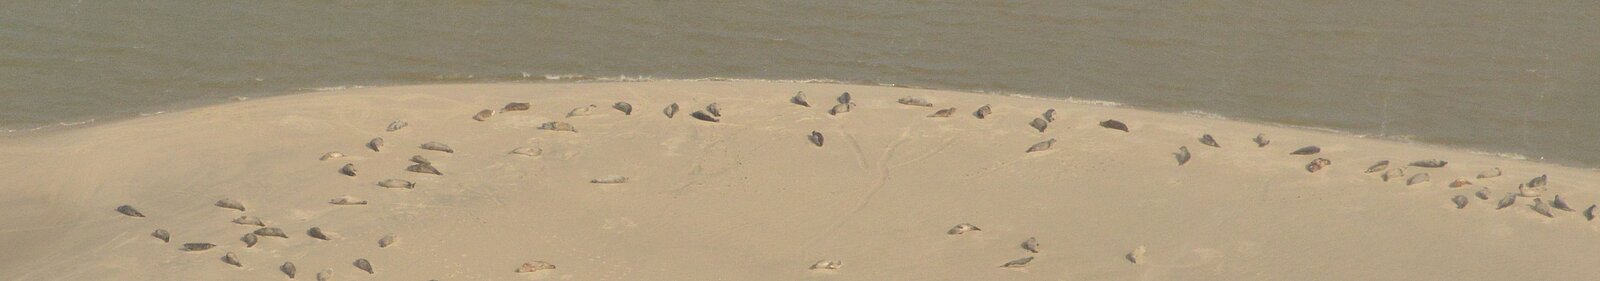 grey seals at the beach, photo taken by plane